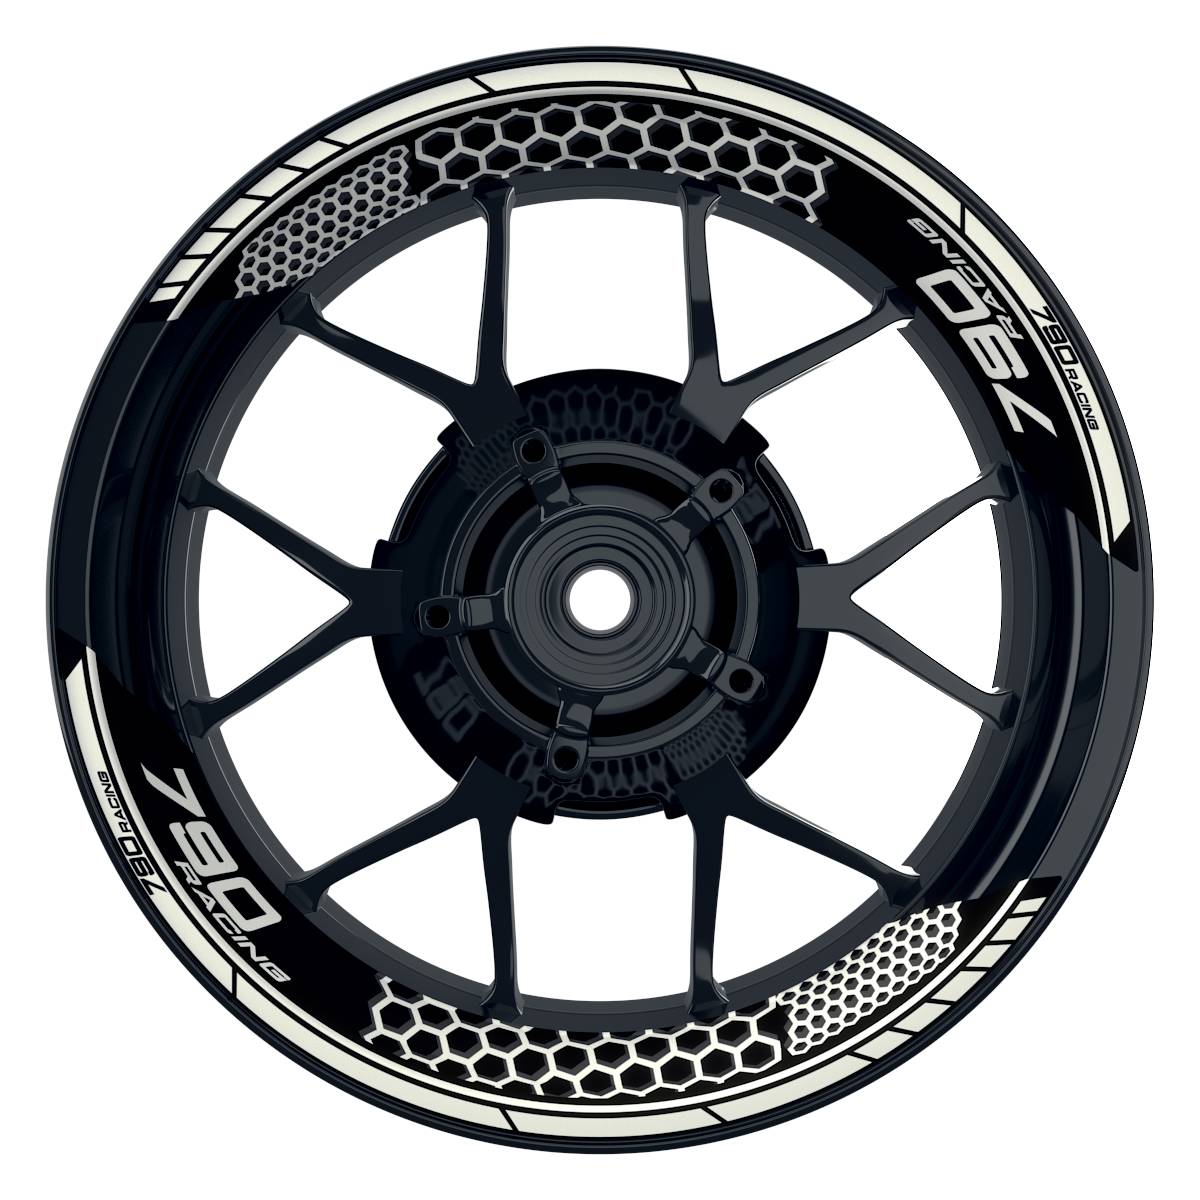 KTM Racing 790 Hexagon schwarz weiss Frontansicht